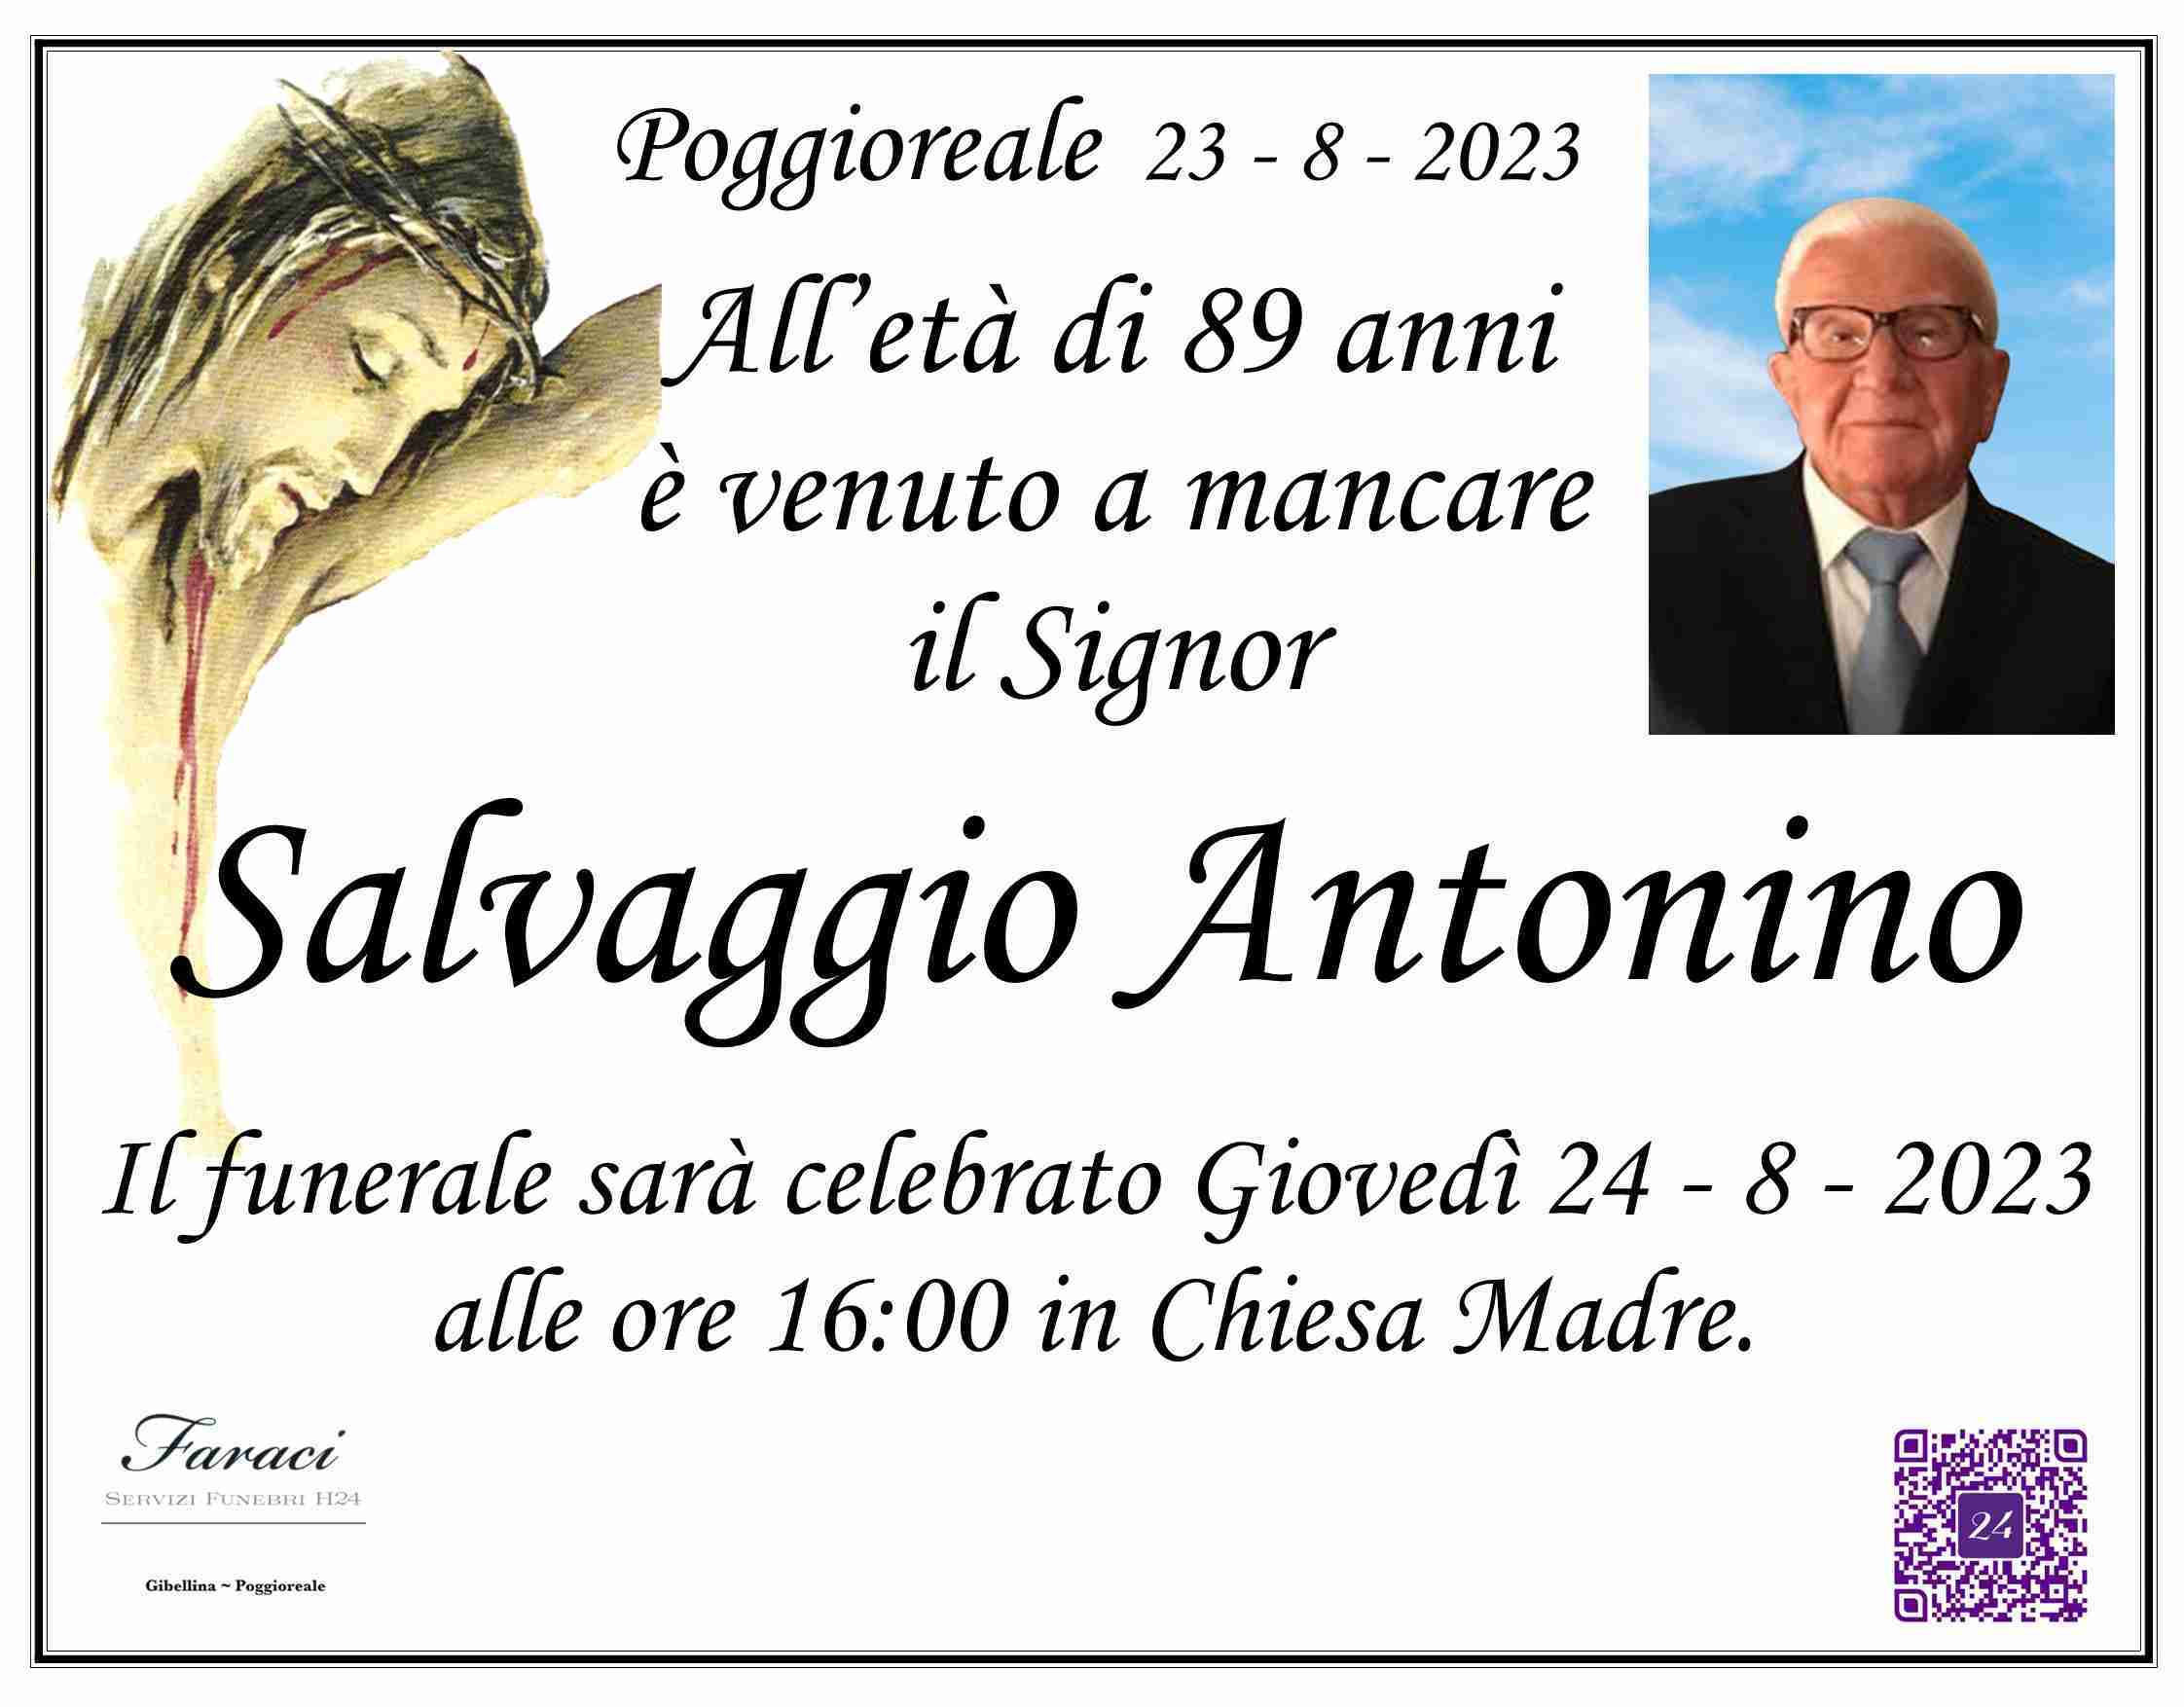 Antonino Salvaggio